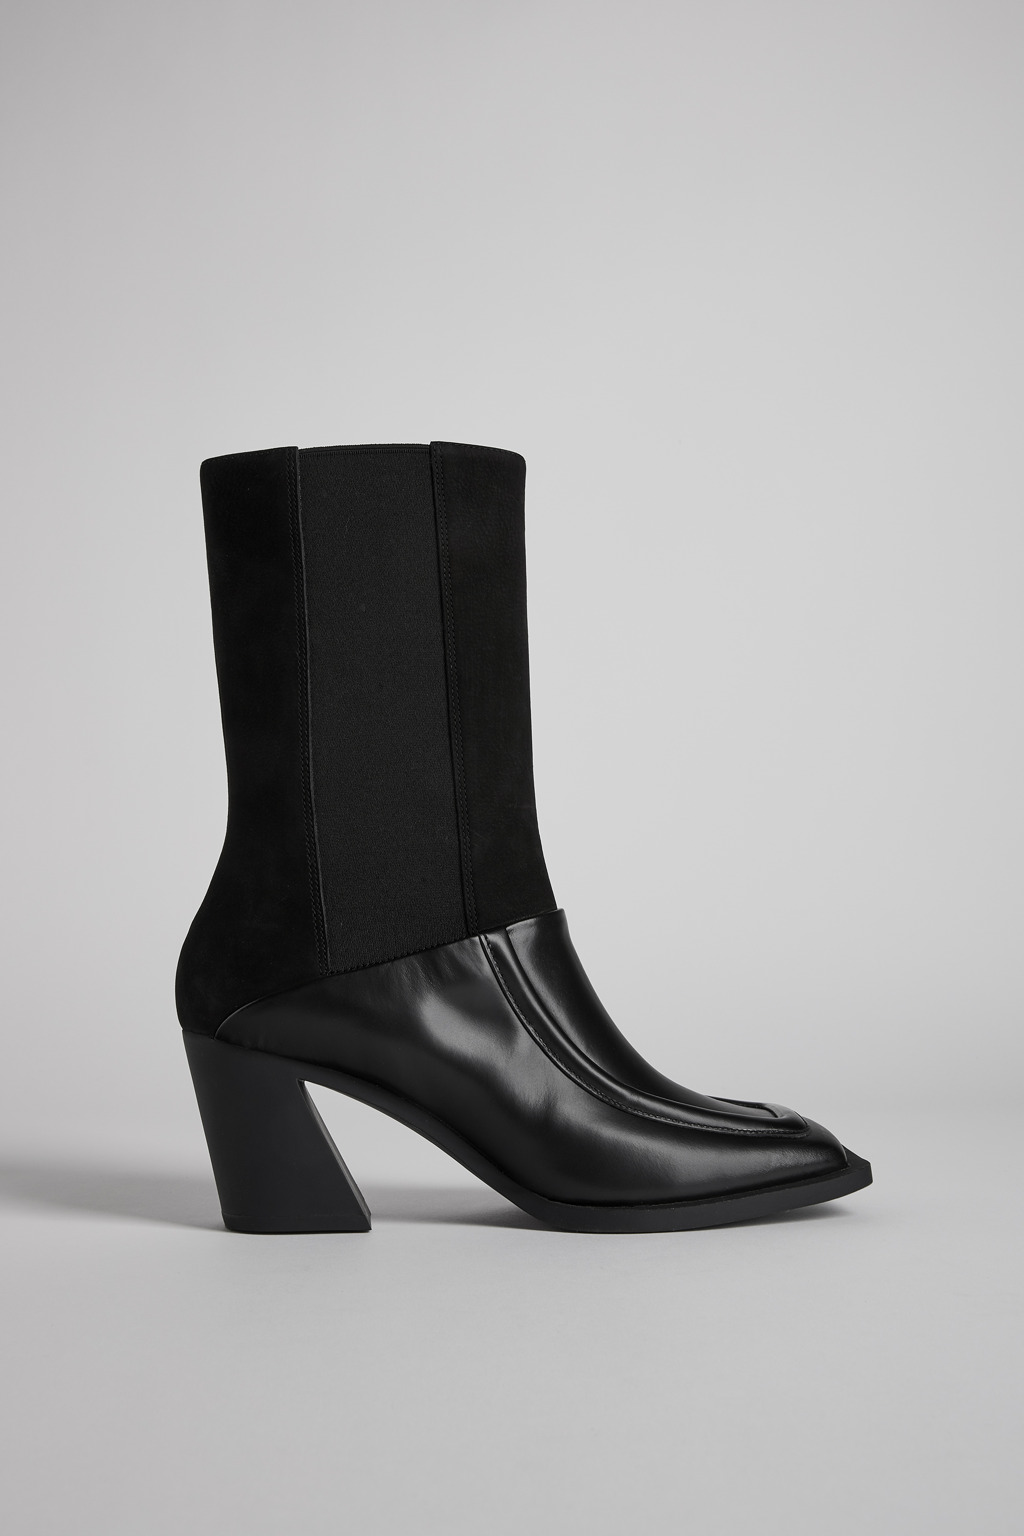 Karole Black Boots for Women - Spring/Summer collection - Camper USA